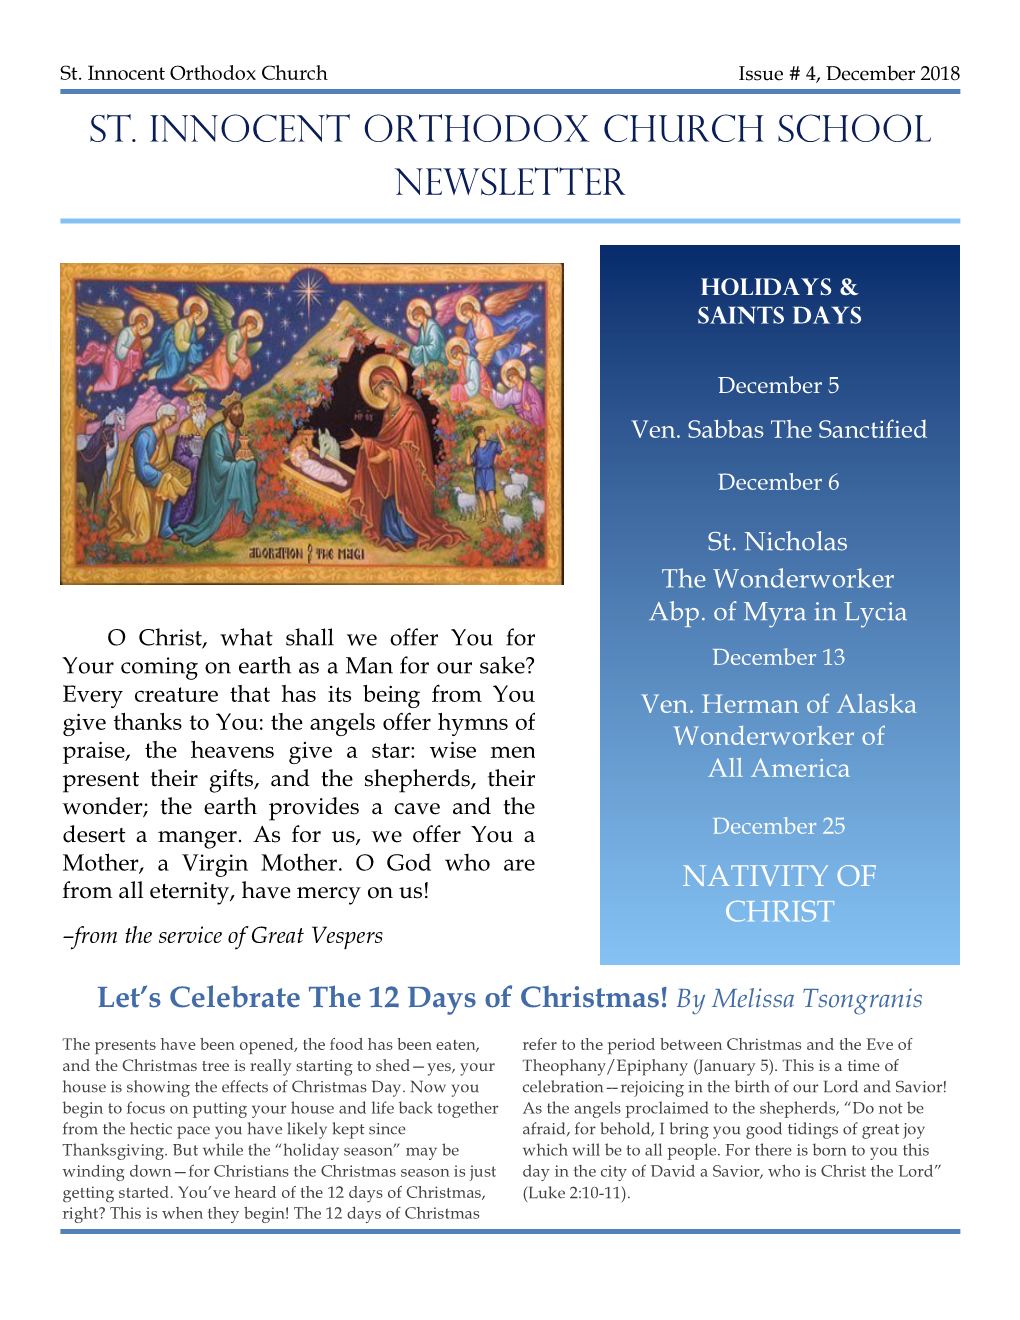 St. Innocent Orthodox Church School Newsletter